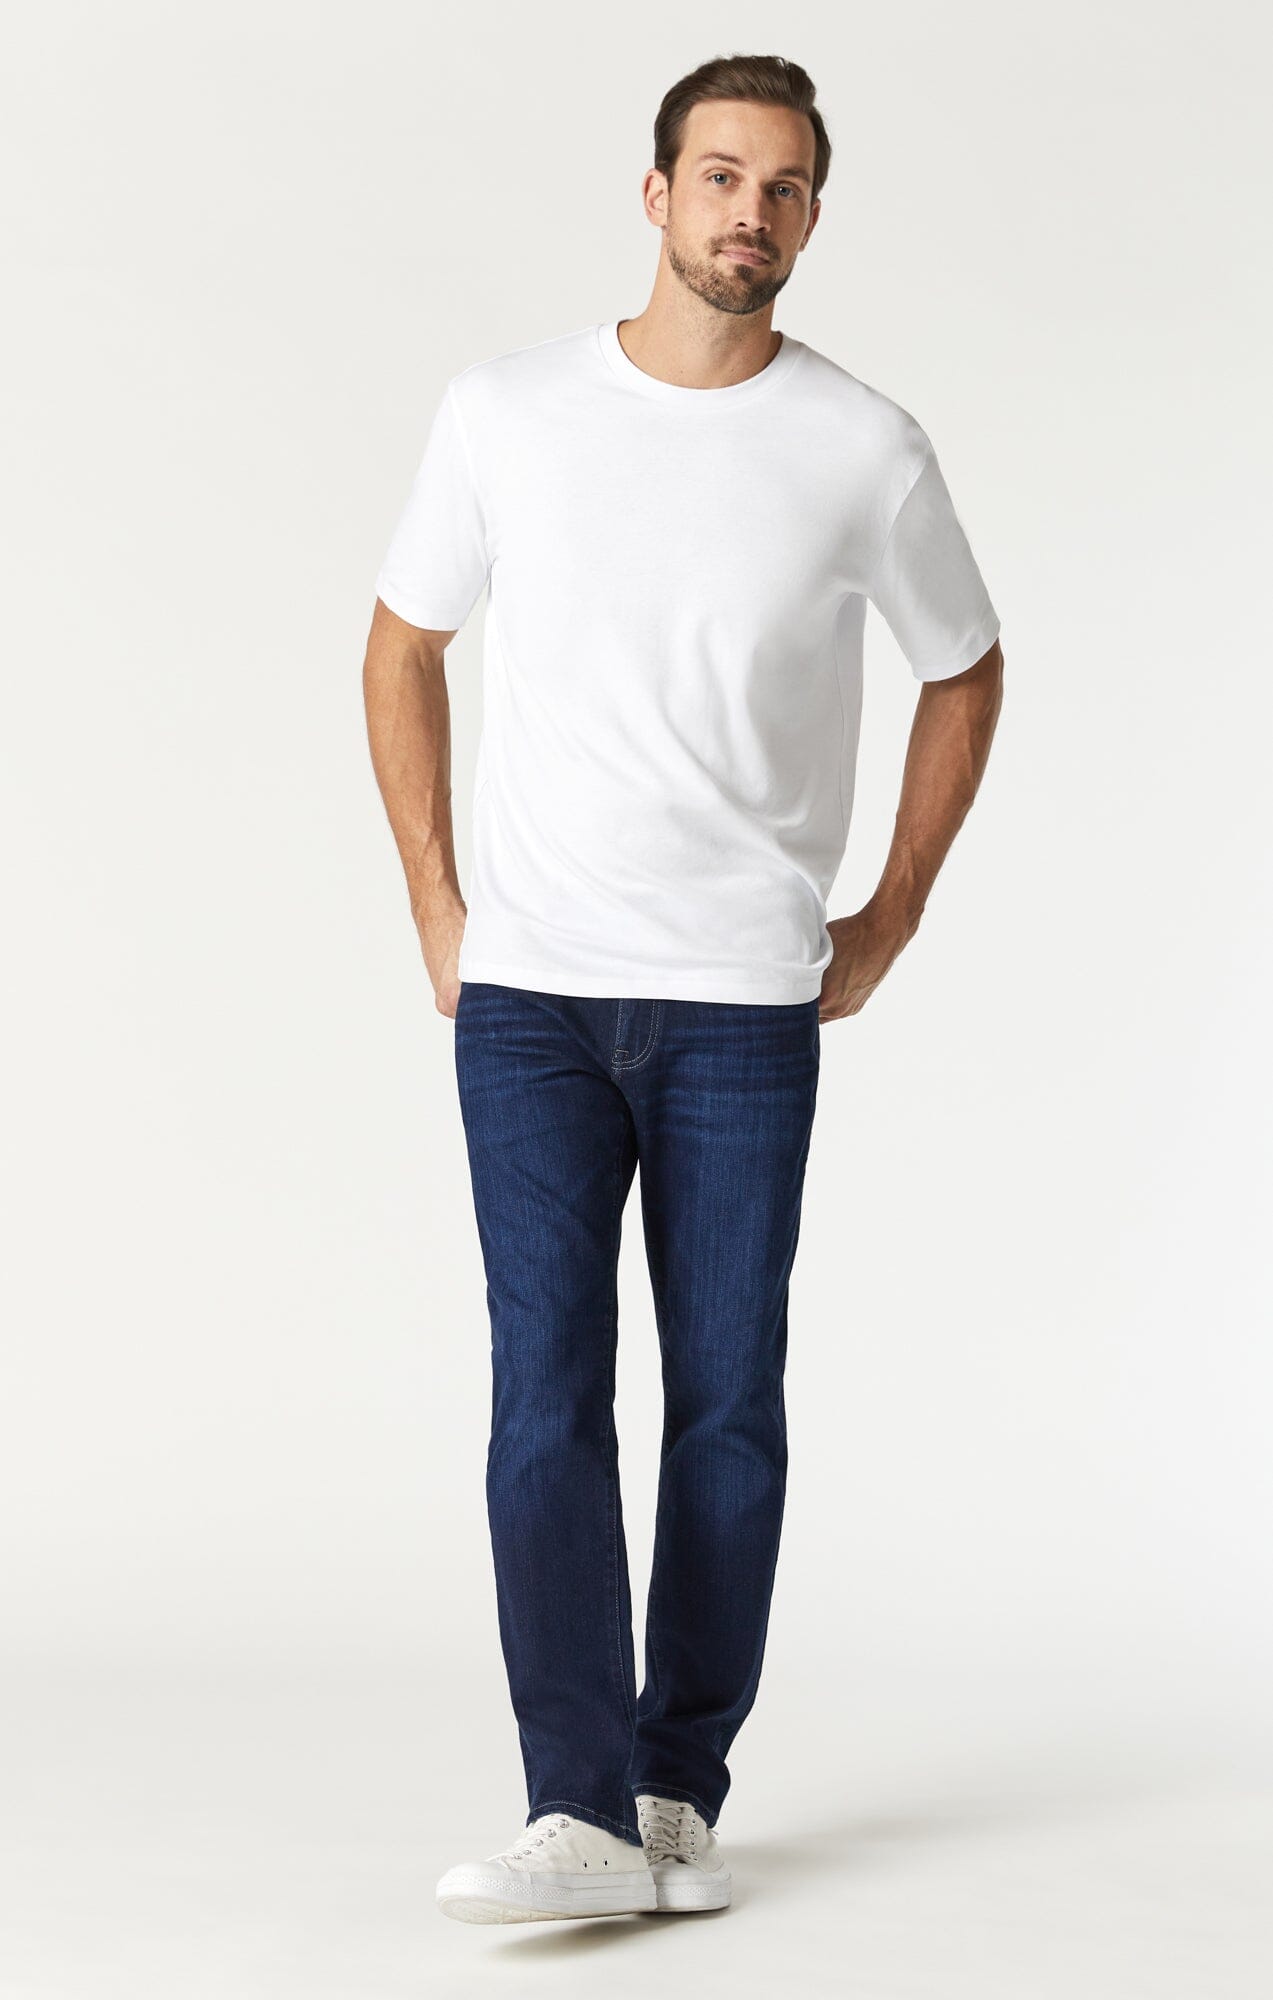 Level 7 Men's Relaxed Bootcut Distressed Light Wash Zip Cargo Jeans Premium  Denim – Level 7 Jeans